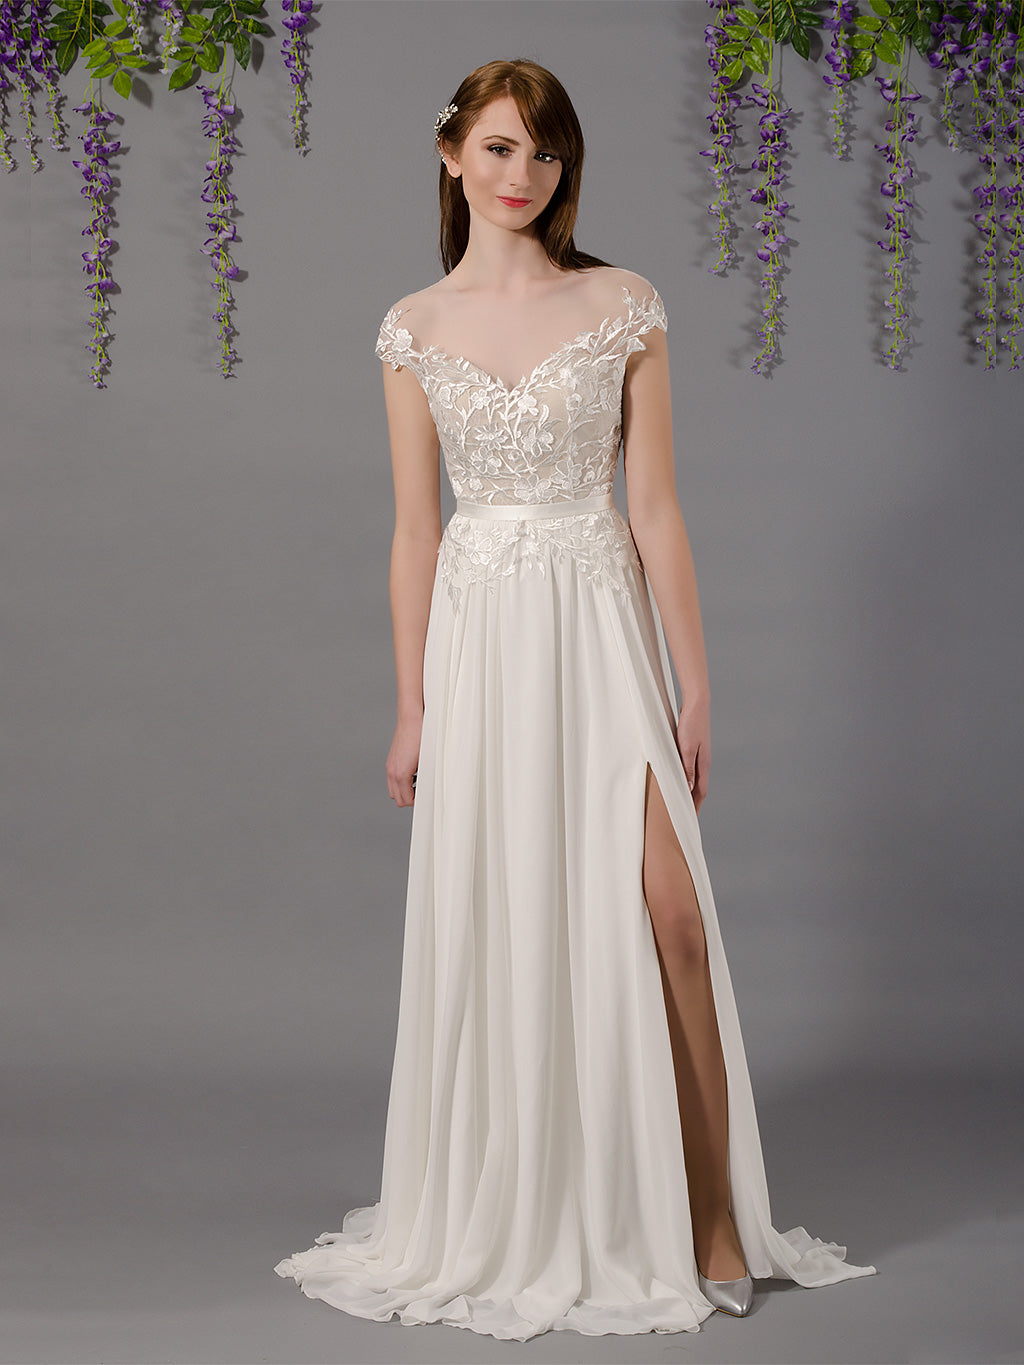 Sleeveless lace wedding dress 4036